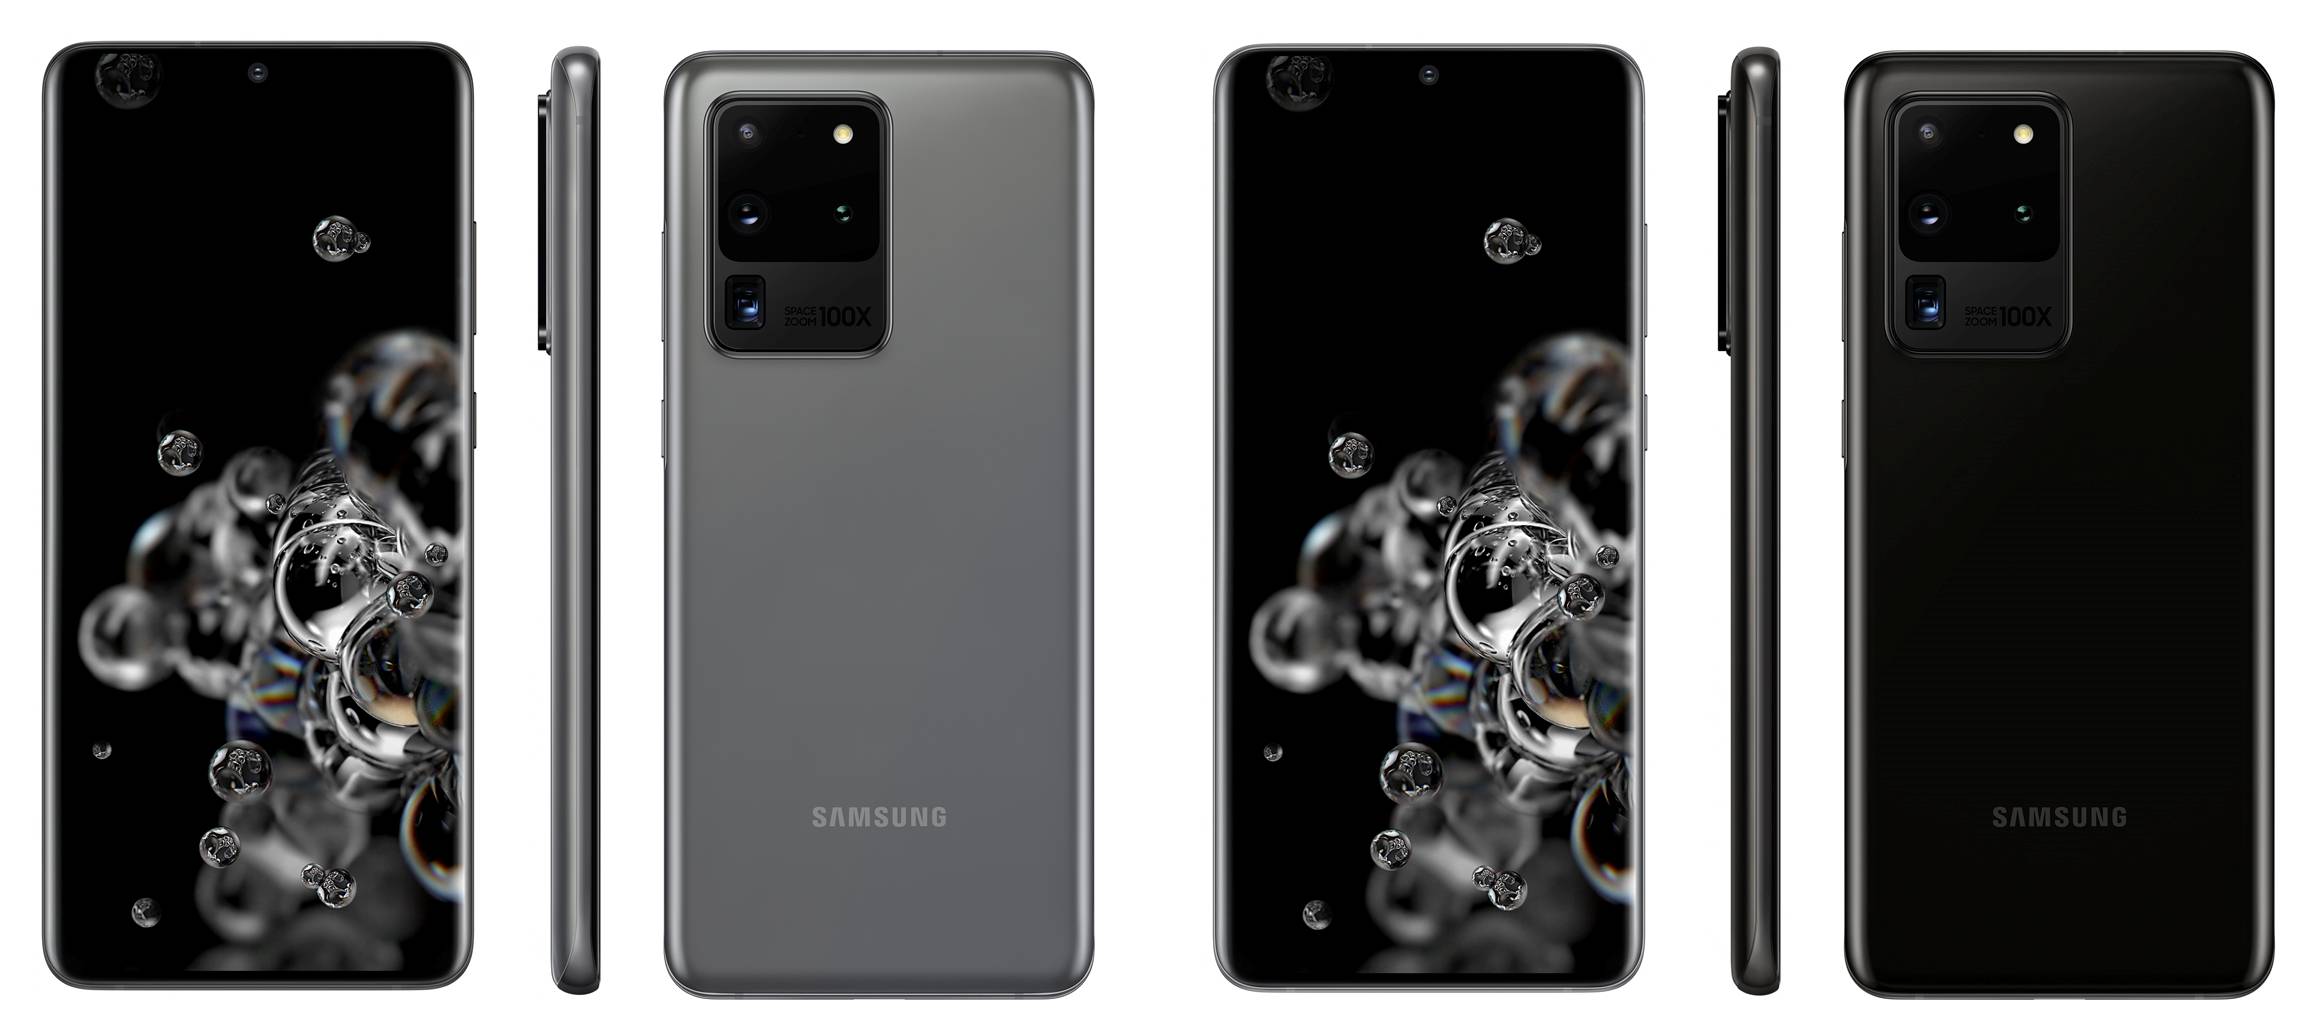 Offizielle Pressebilder des Samsung GALAXY S20 Ultra